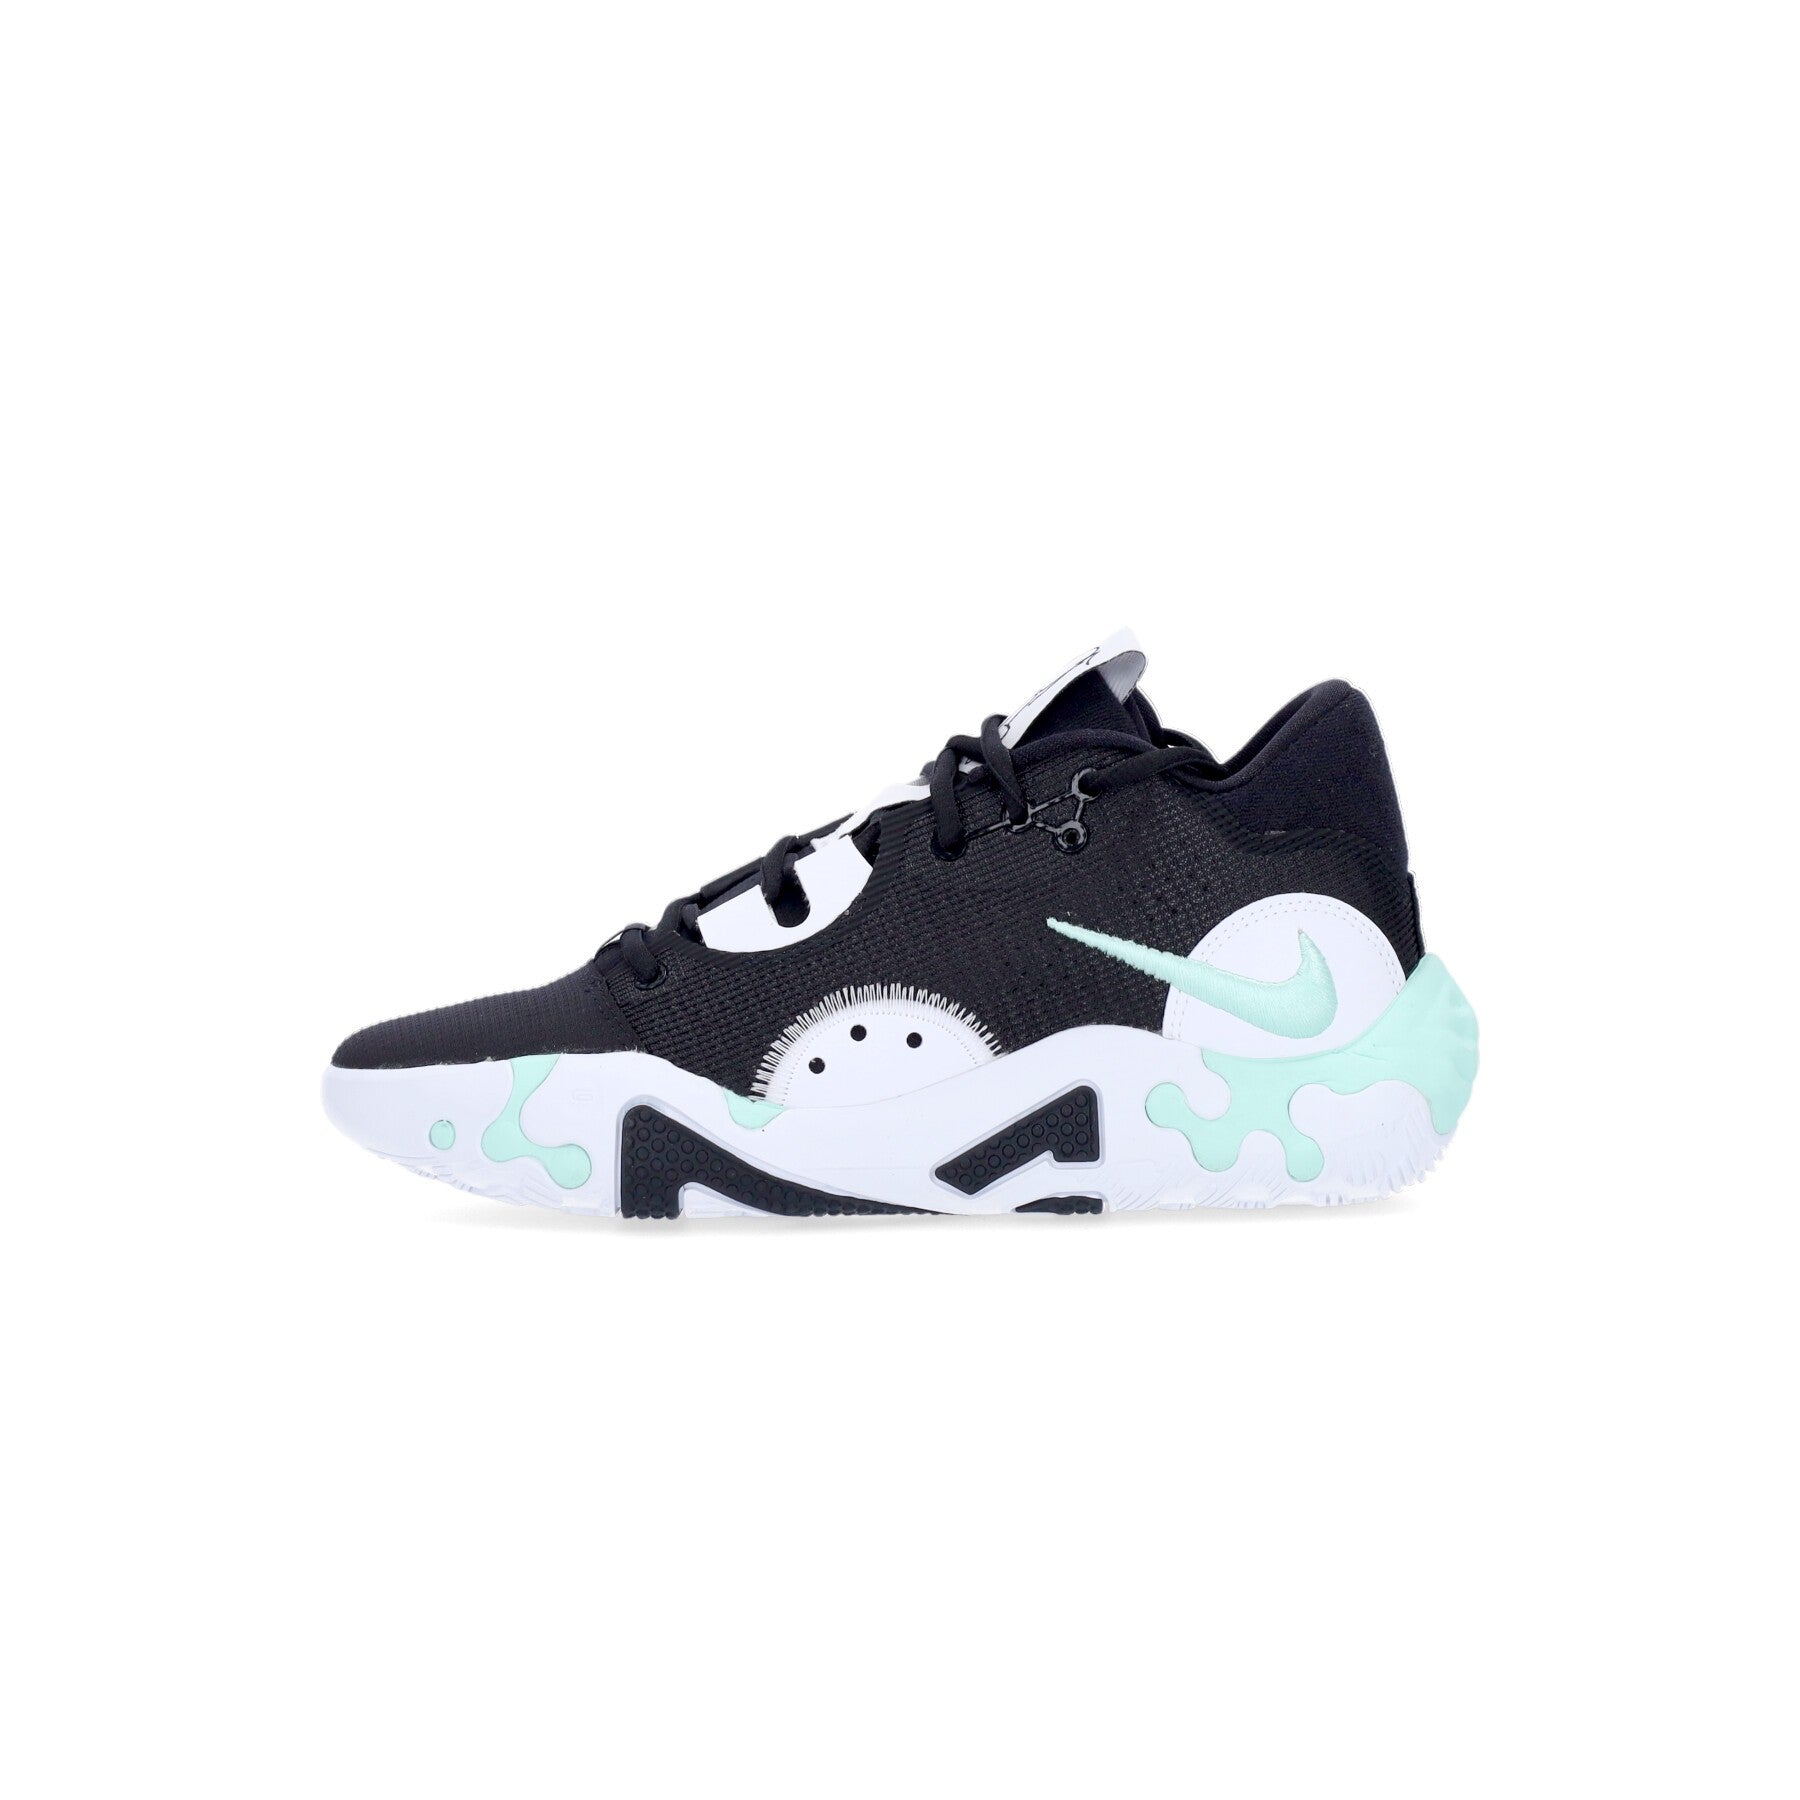 Men's Basketball Shoe Pg 6 Black/mint Foam/white